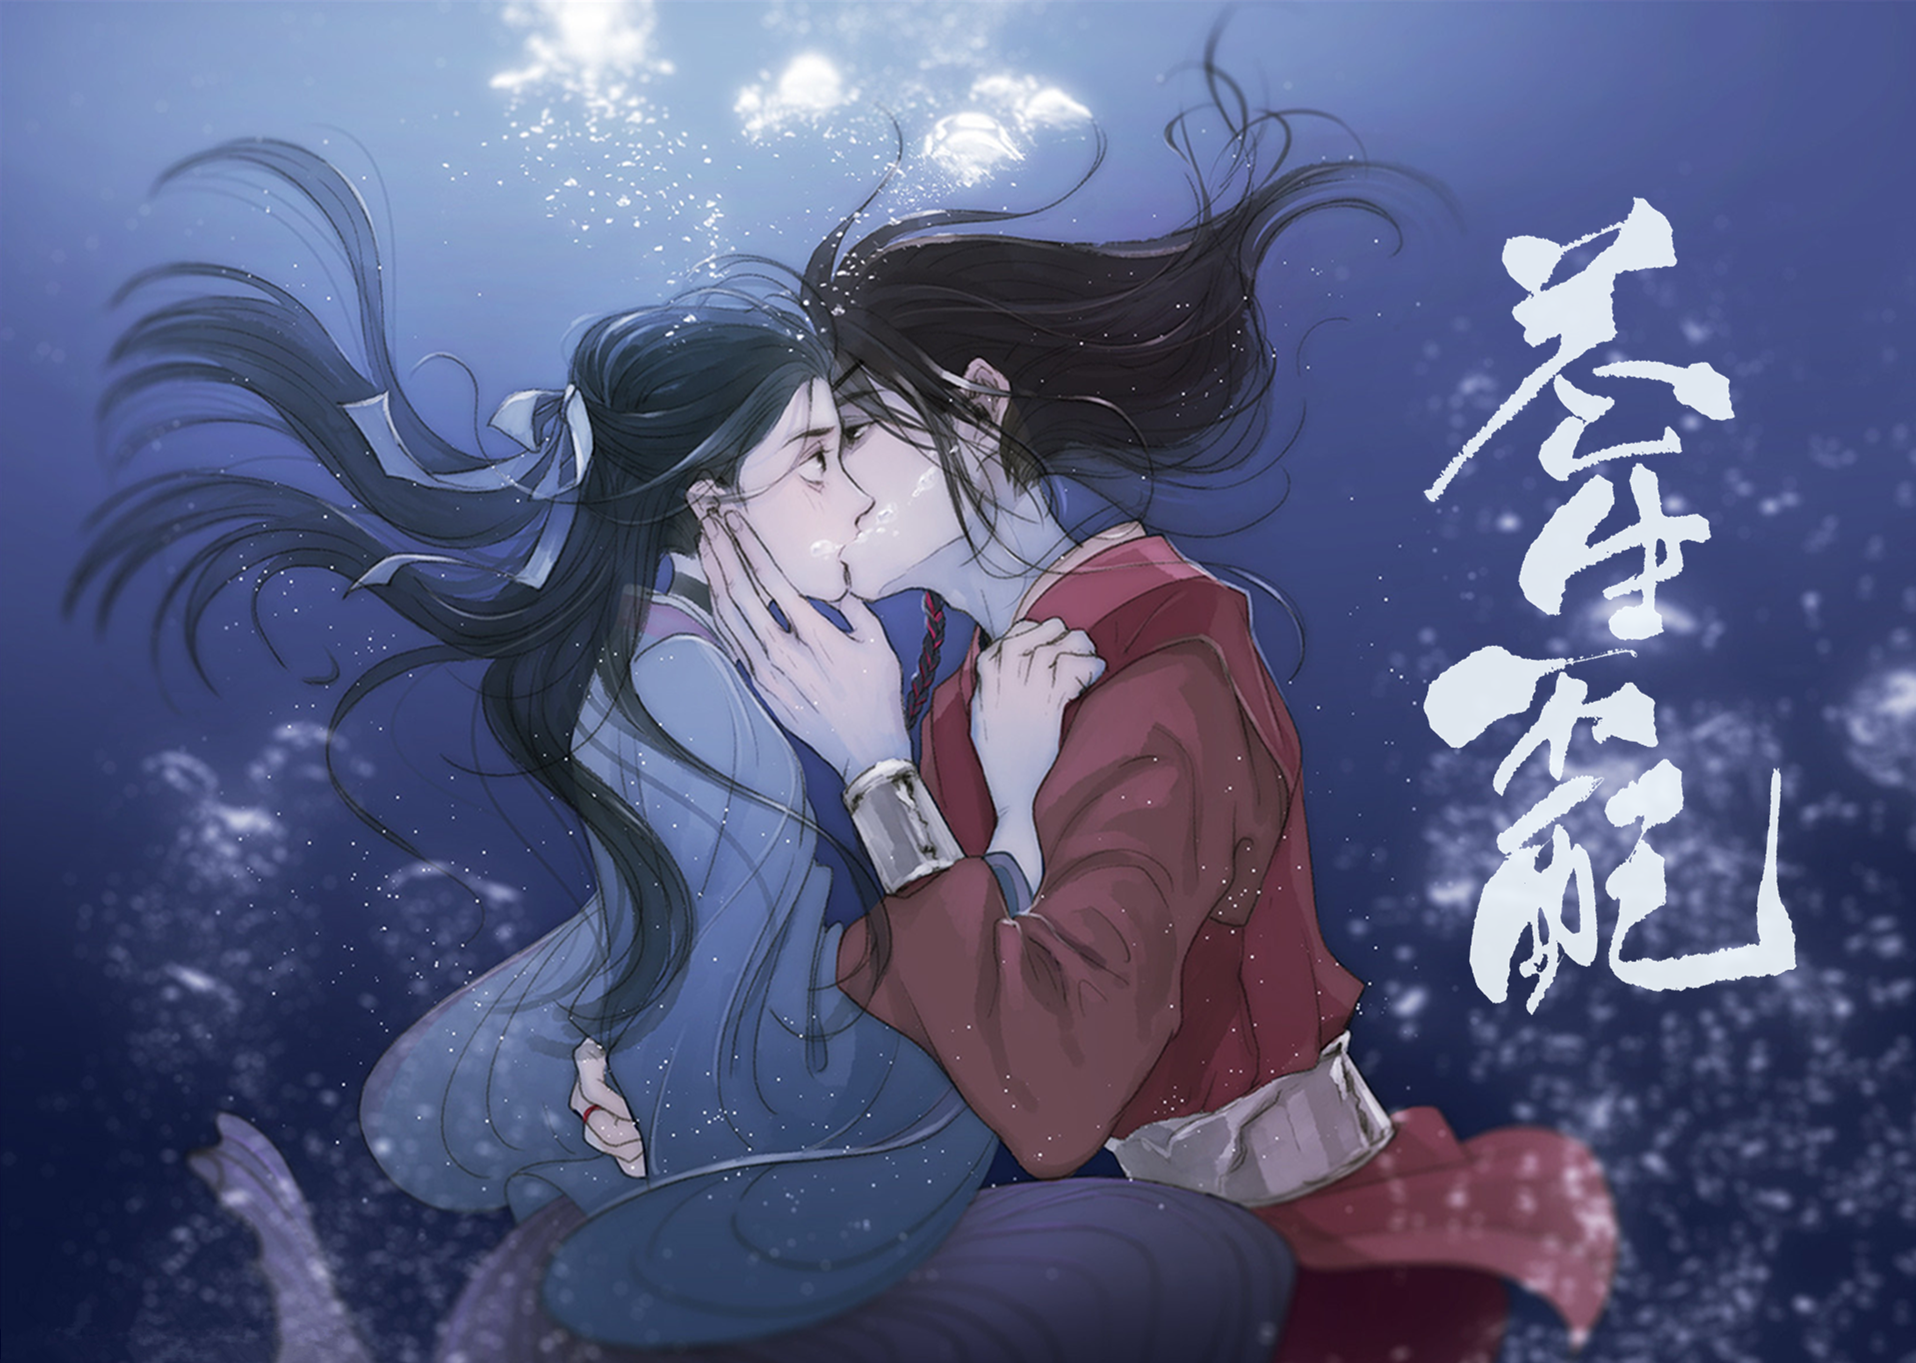 Благословение небожителей оригинал. Се Лянь и Хуа Чен поцелуй. Хуа Чэн и се Лянь поцелуй под водой. Хуа Чен и се Лянь первый поцелуй. Се Лянь и Хуа Чен поцелуй в воде.